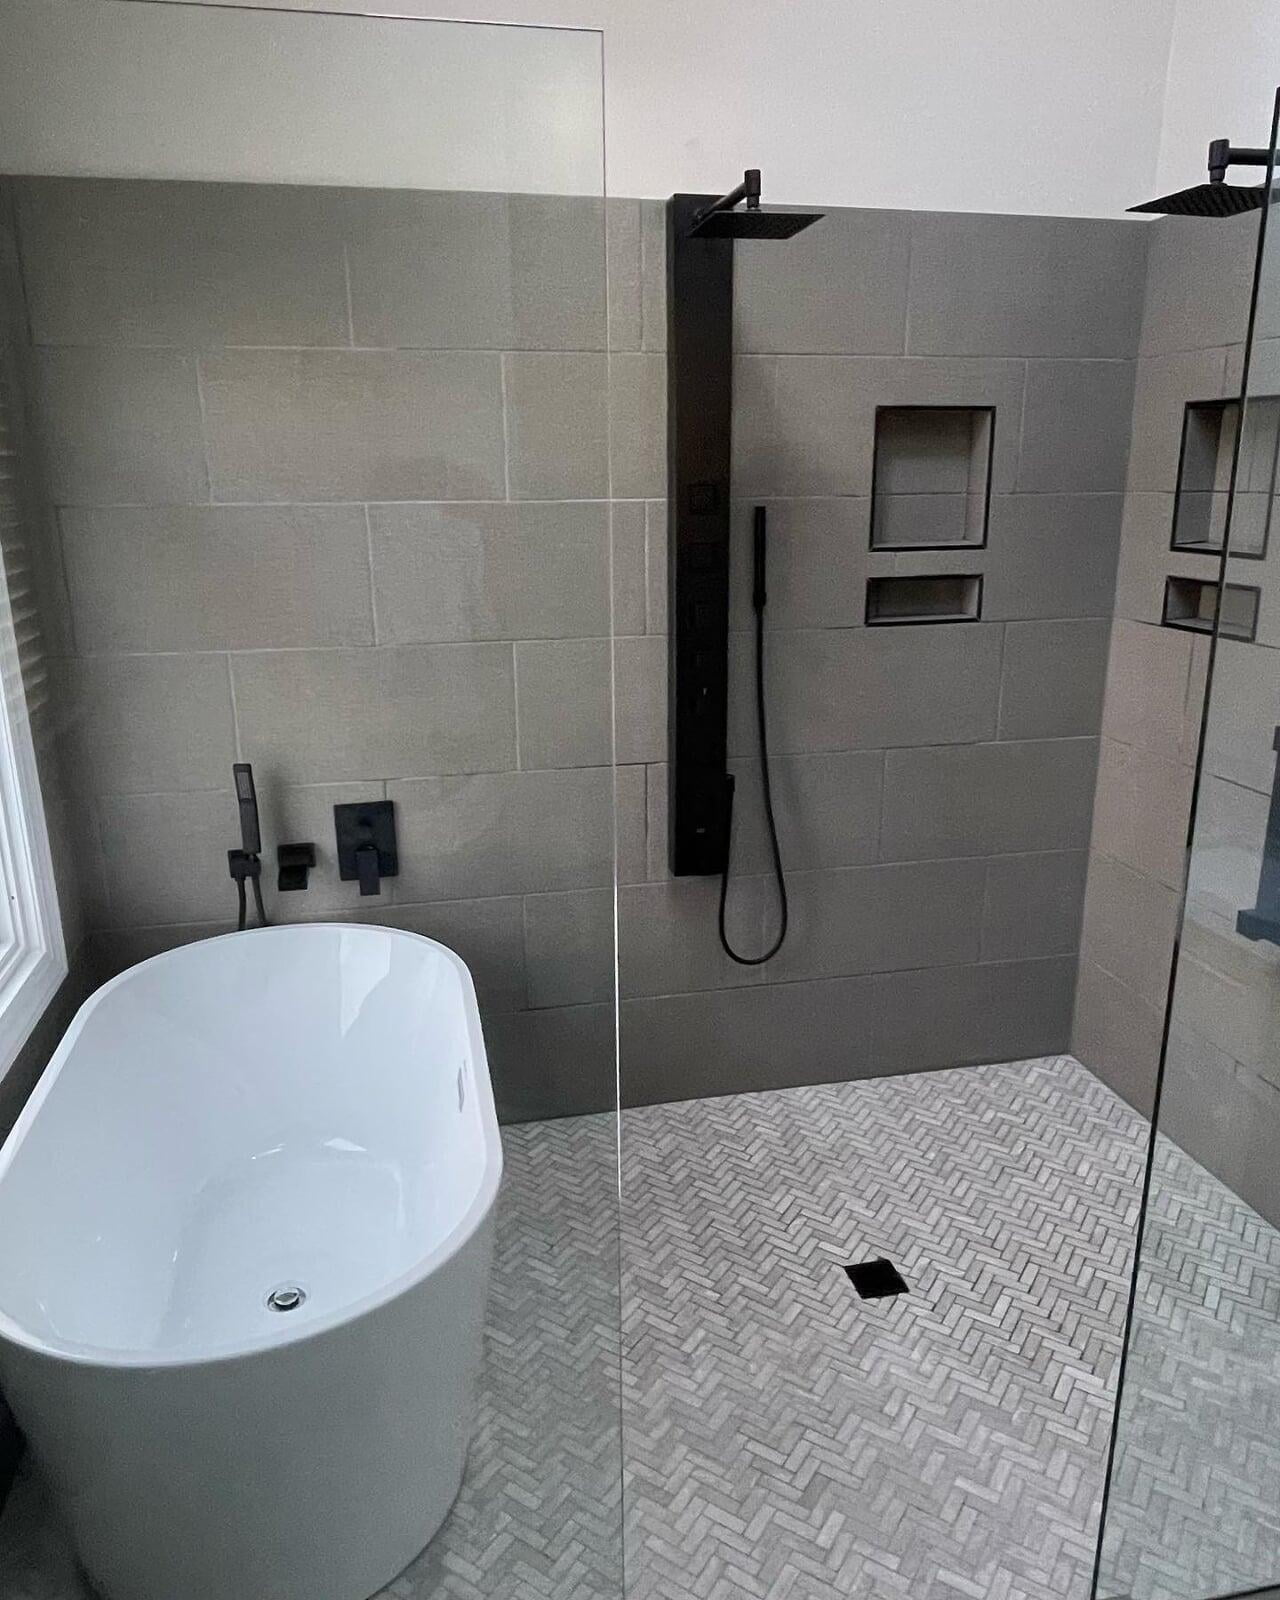 Bathroom Remodel. Tile, oval tub, glass shower surround.